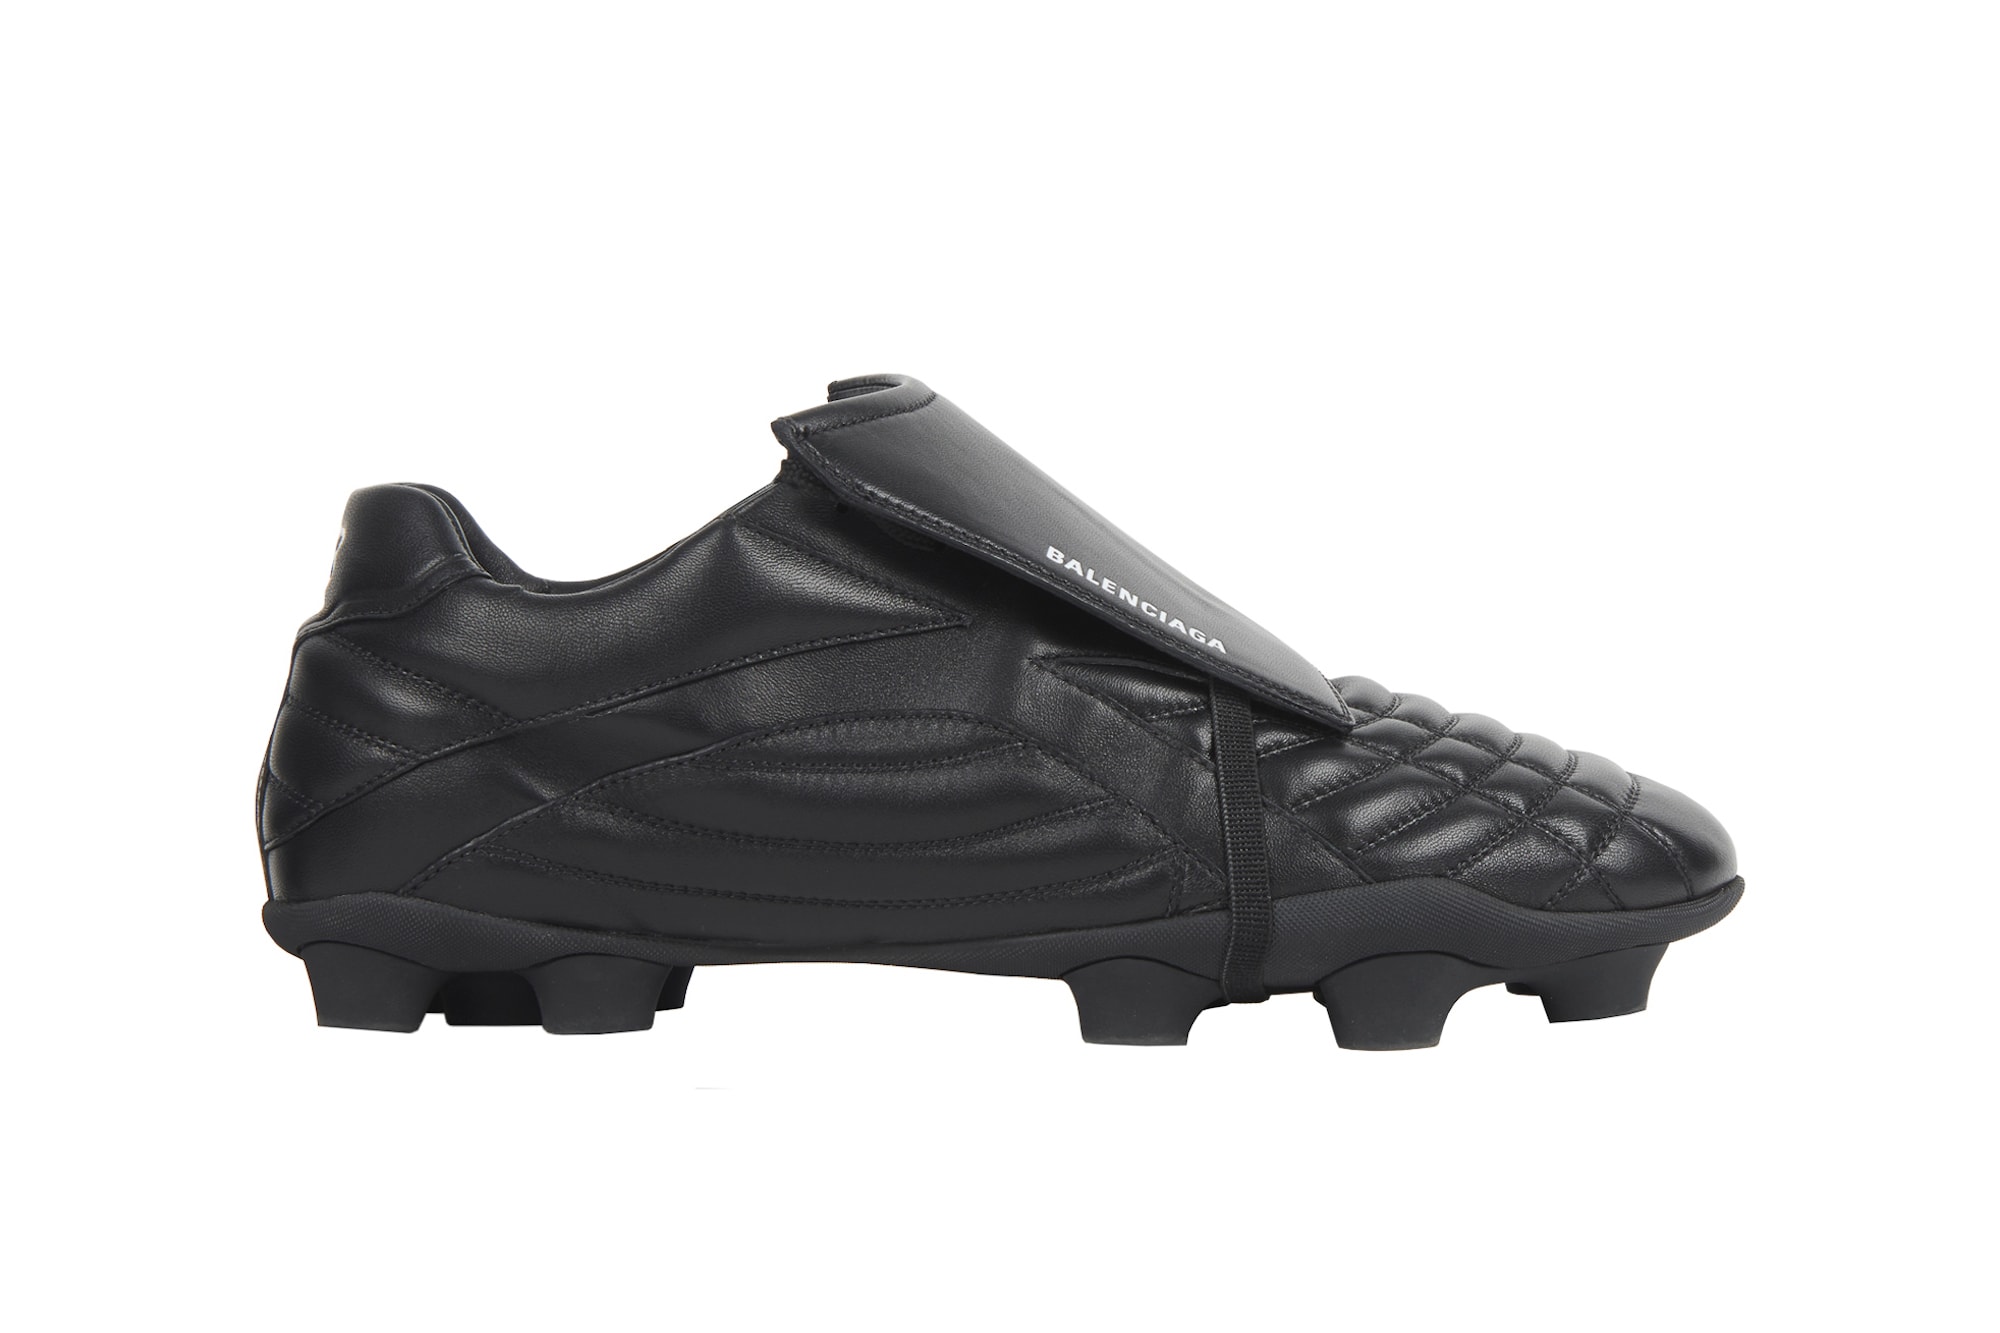 Balenciaga Soccer Cleats Football Boot Sneaker Release Shoe Fall/Winter 2020 Collection Where to Buy